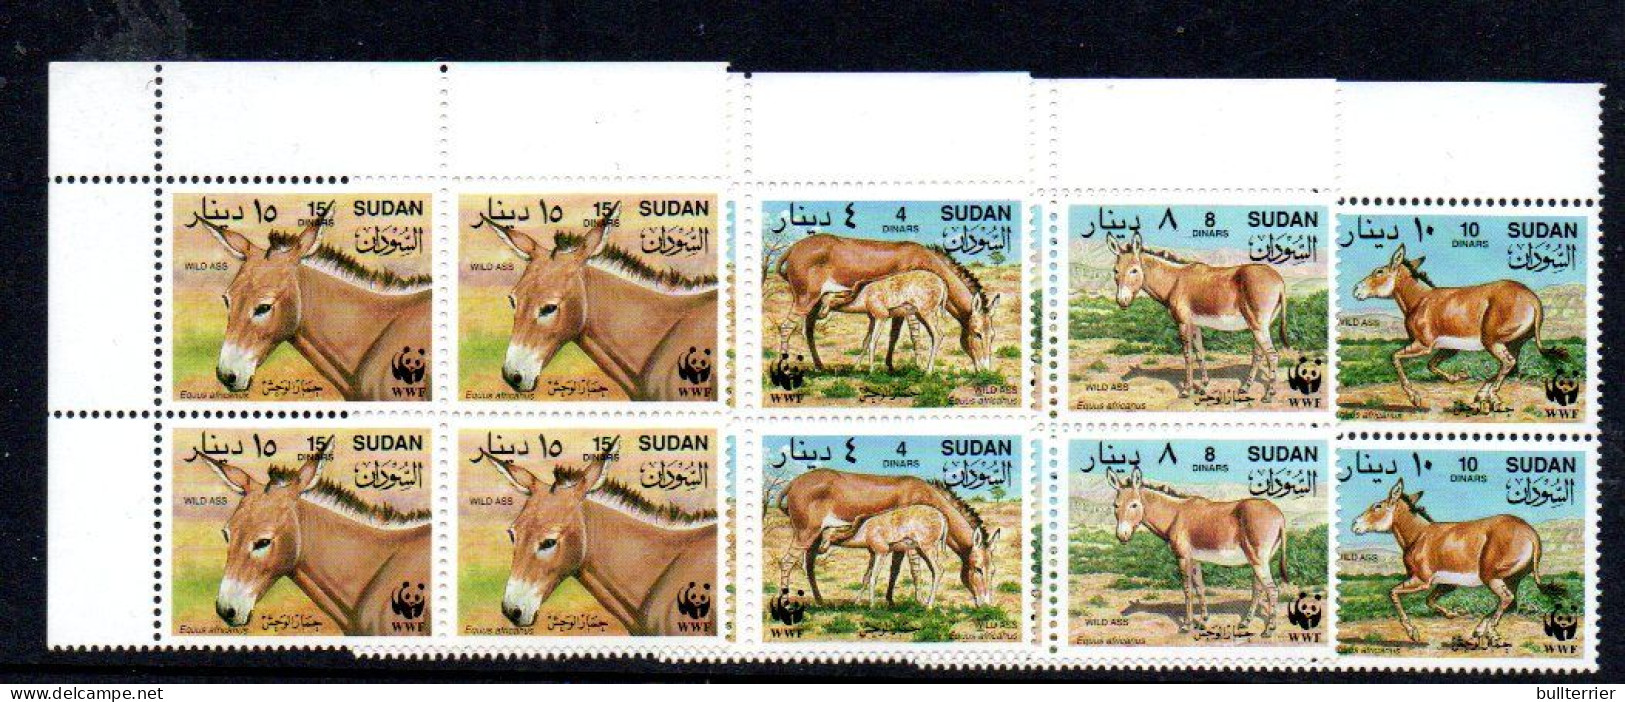 SUDAN - WWF - WILD ASS SET OF 4 IN CORNER BLOCKS OF 4   MINT NEVER HINGED - Soedan (1954-...)